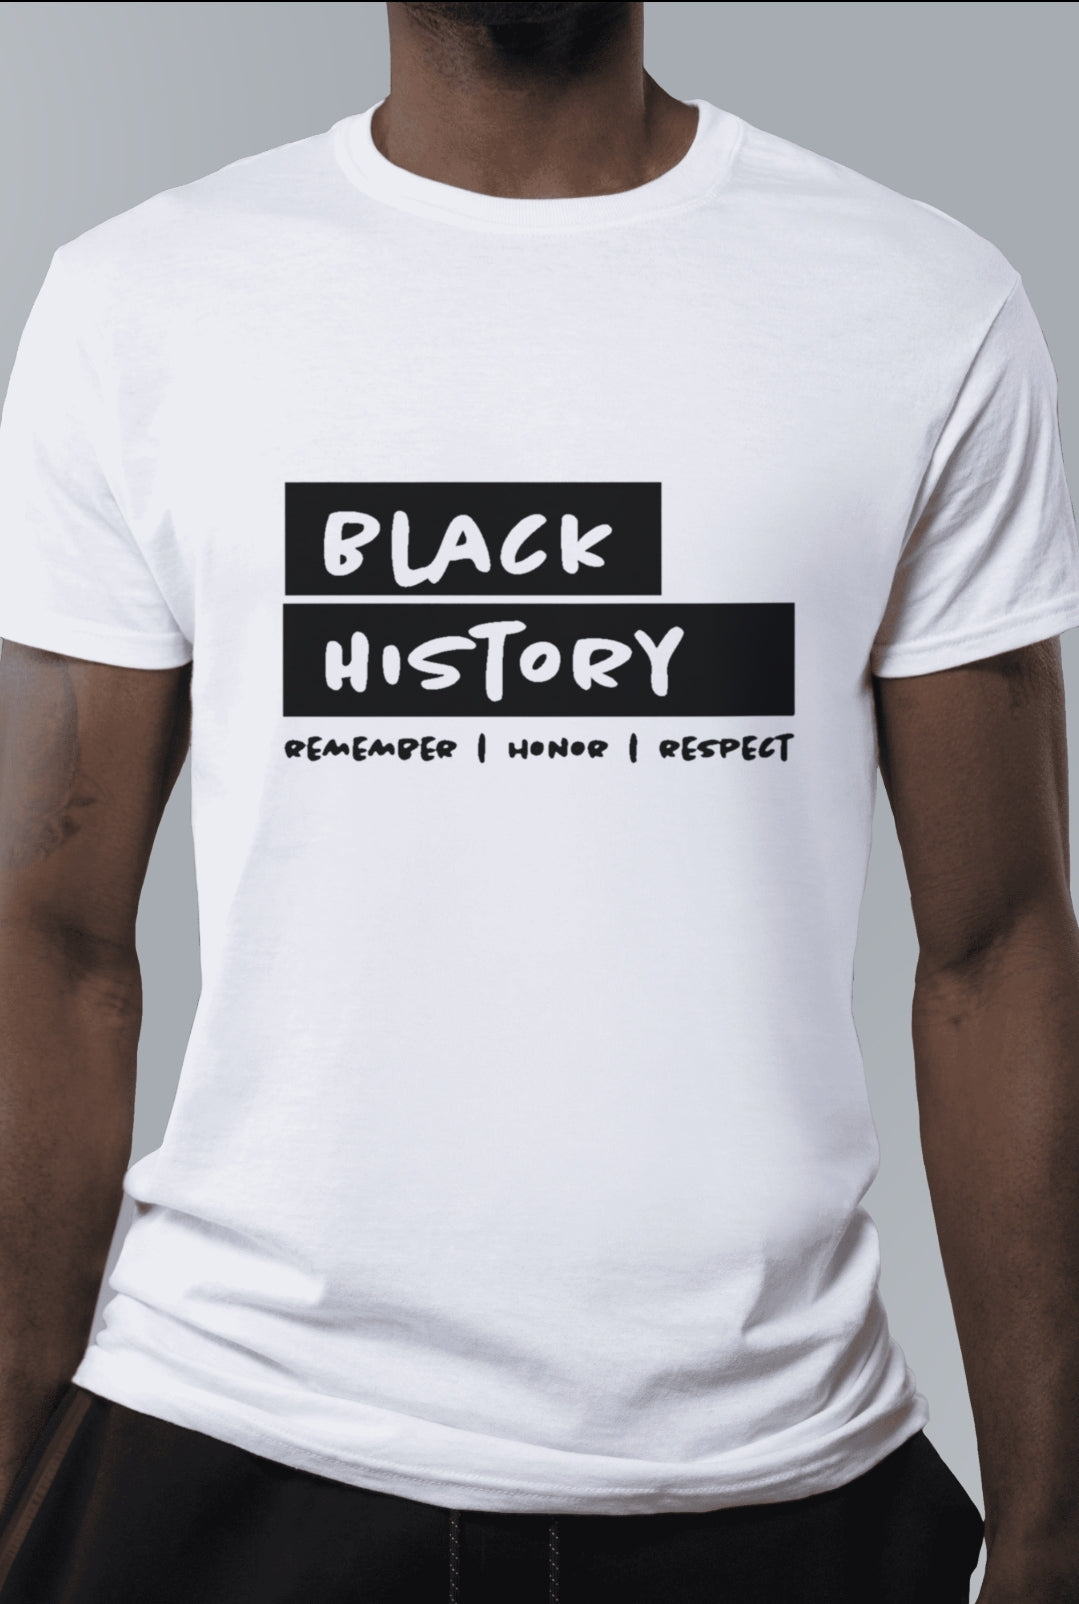 Black History: Remember, Honor & Respect